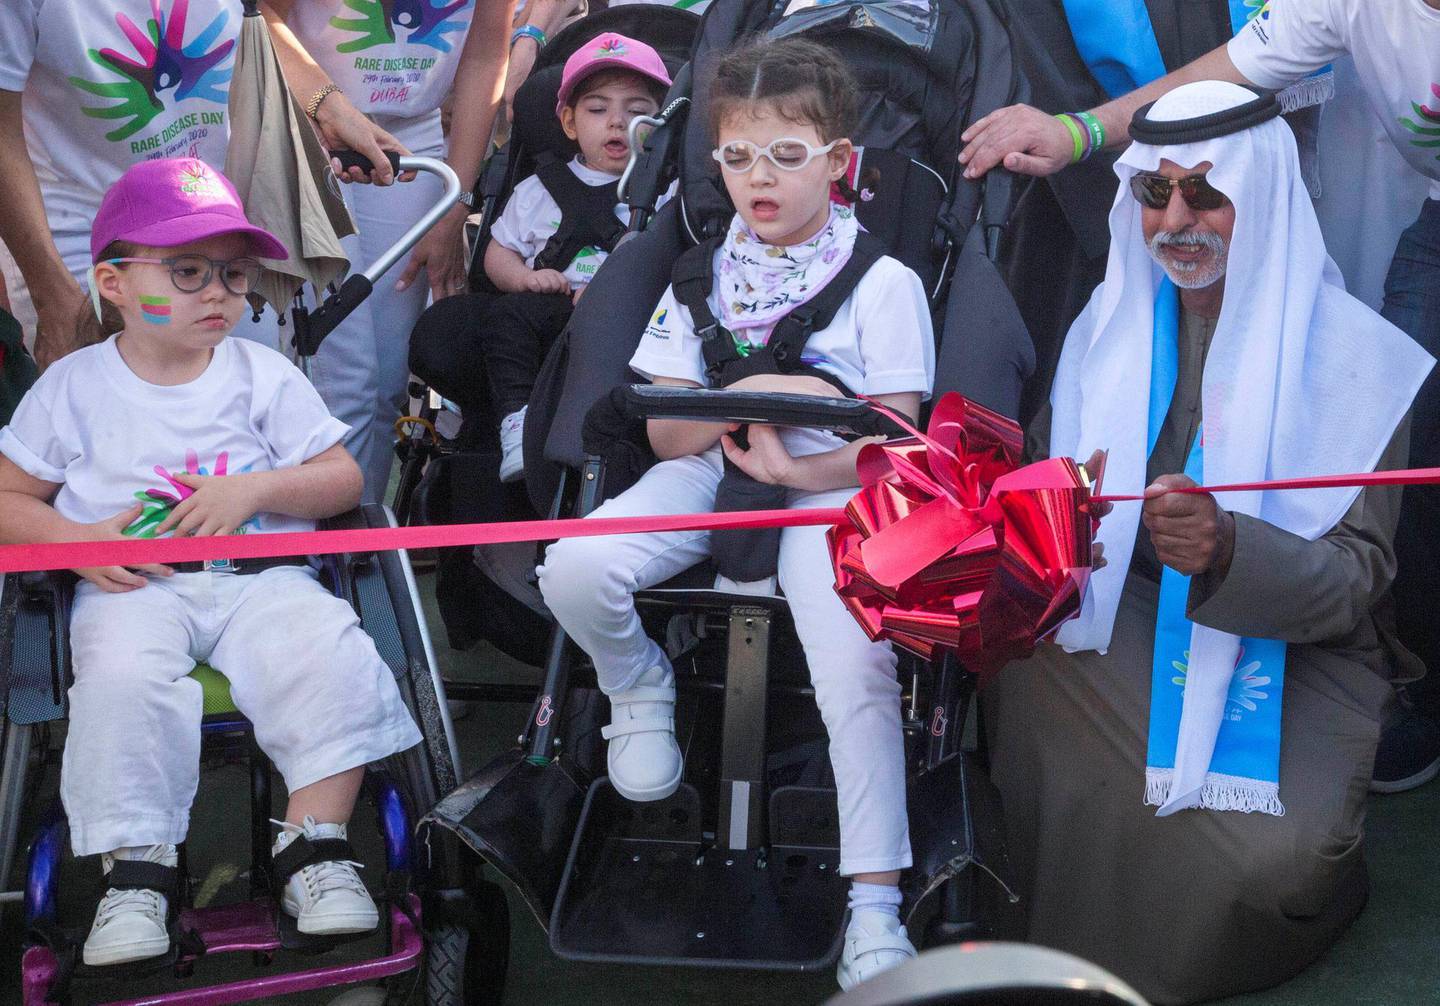 Dubai, United Arab Emirates- Sheikh Mubarak Al Nahyan opening the walkathon at the Rare Disease Walkathon at Kite Beach, Dubai.  Ruel Pableo for The National